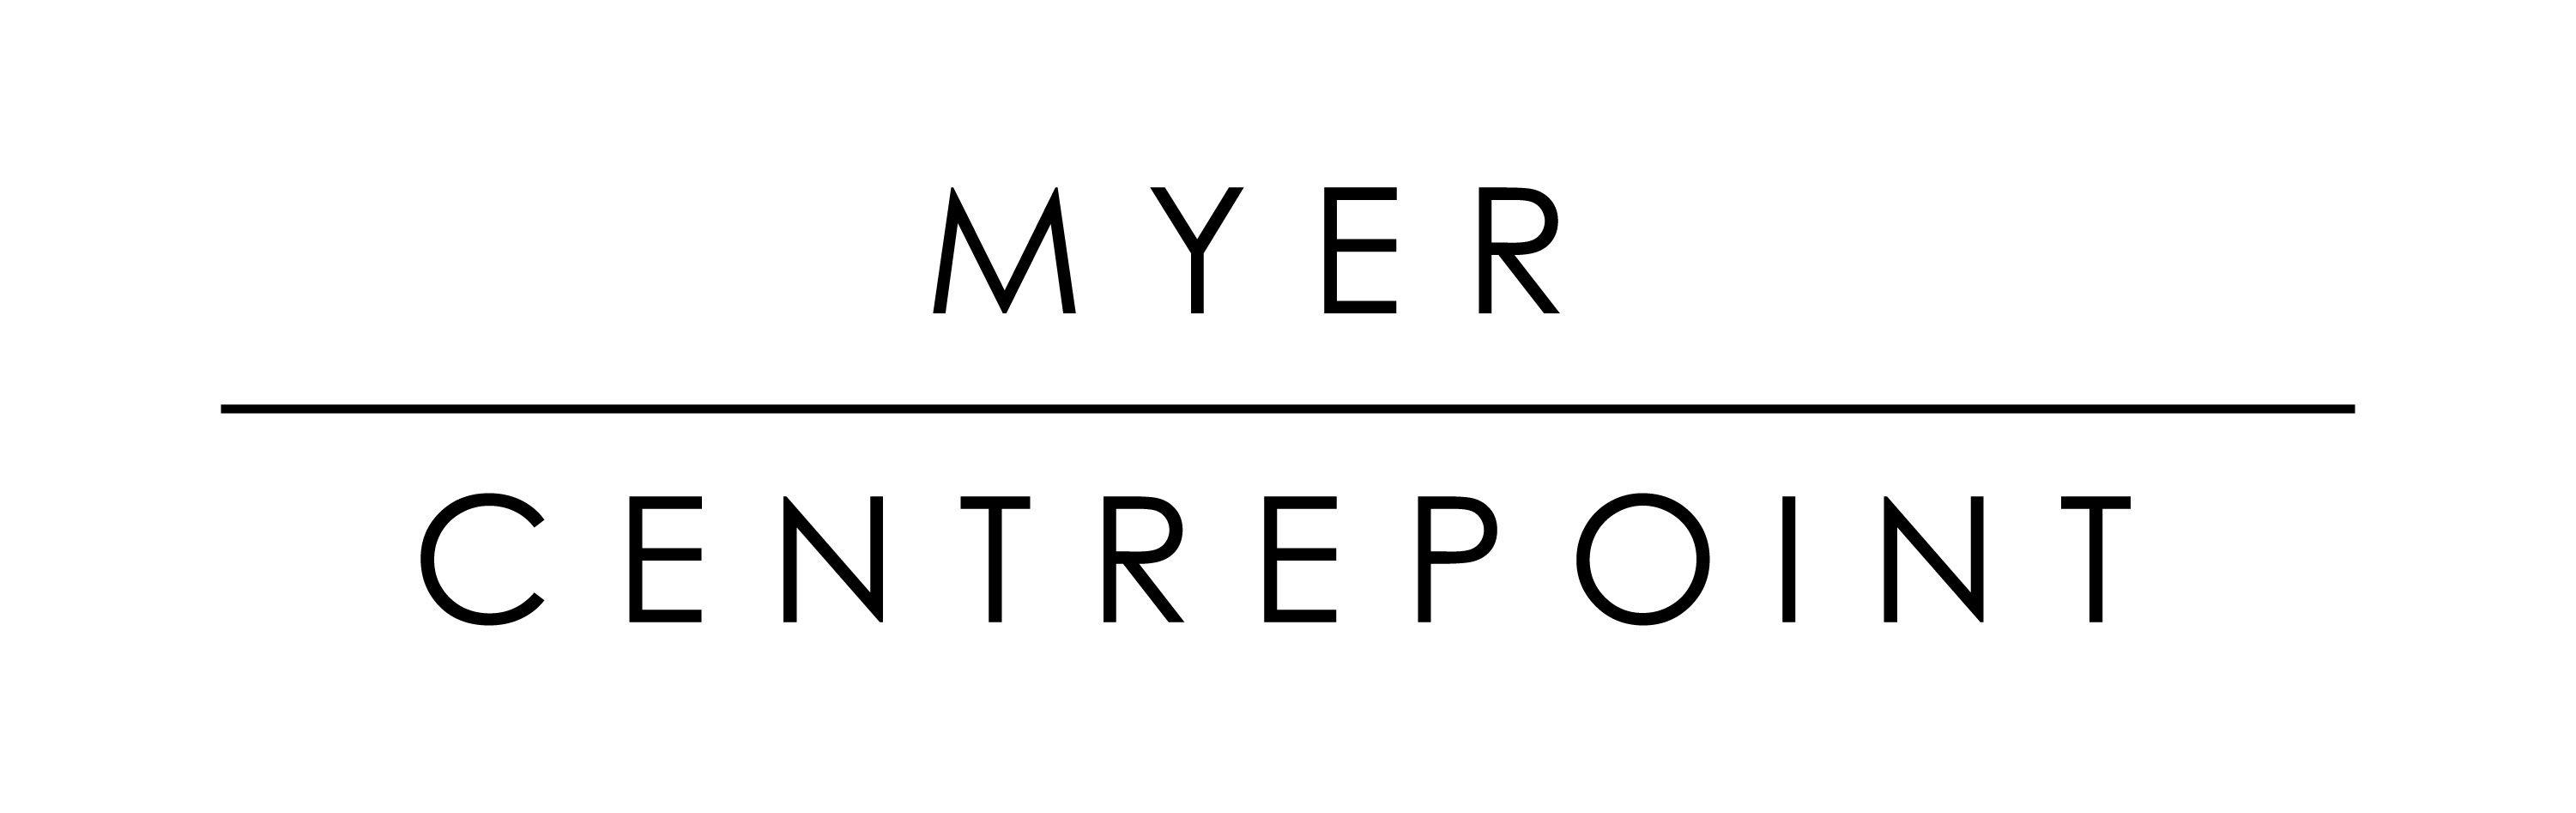 Myer Logo - Home - Myer Centrepoint